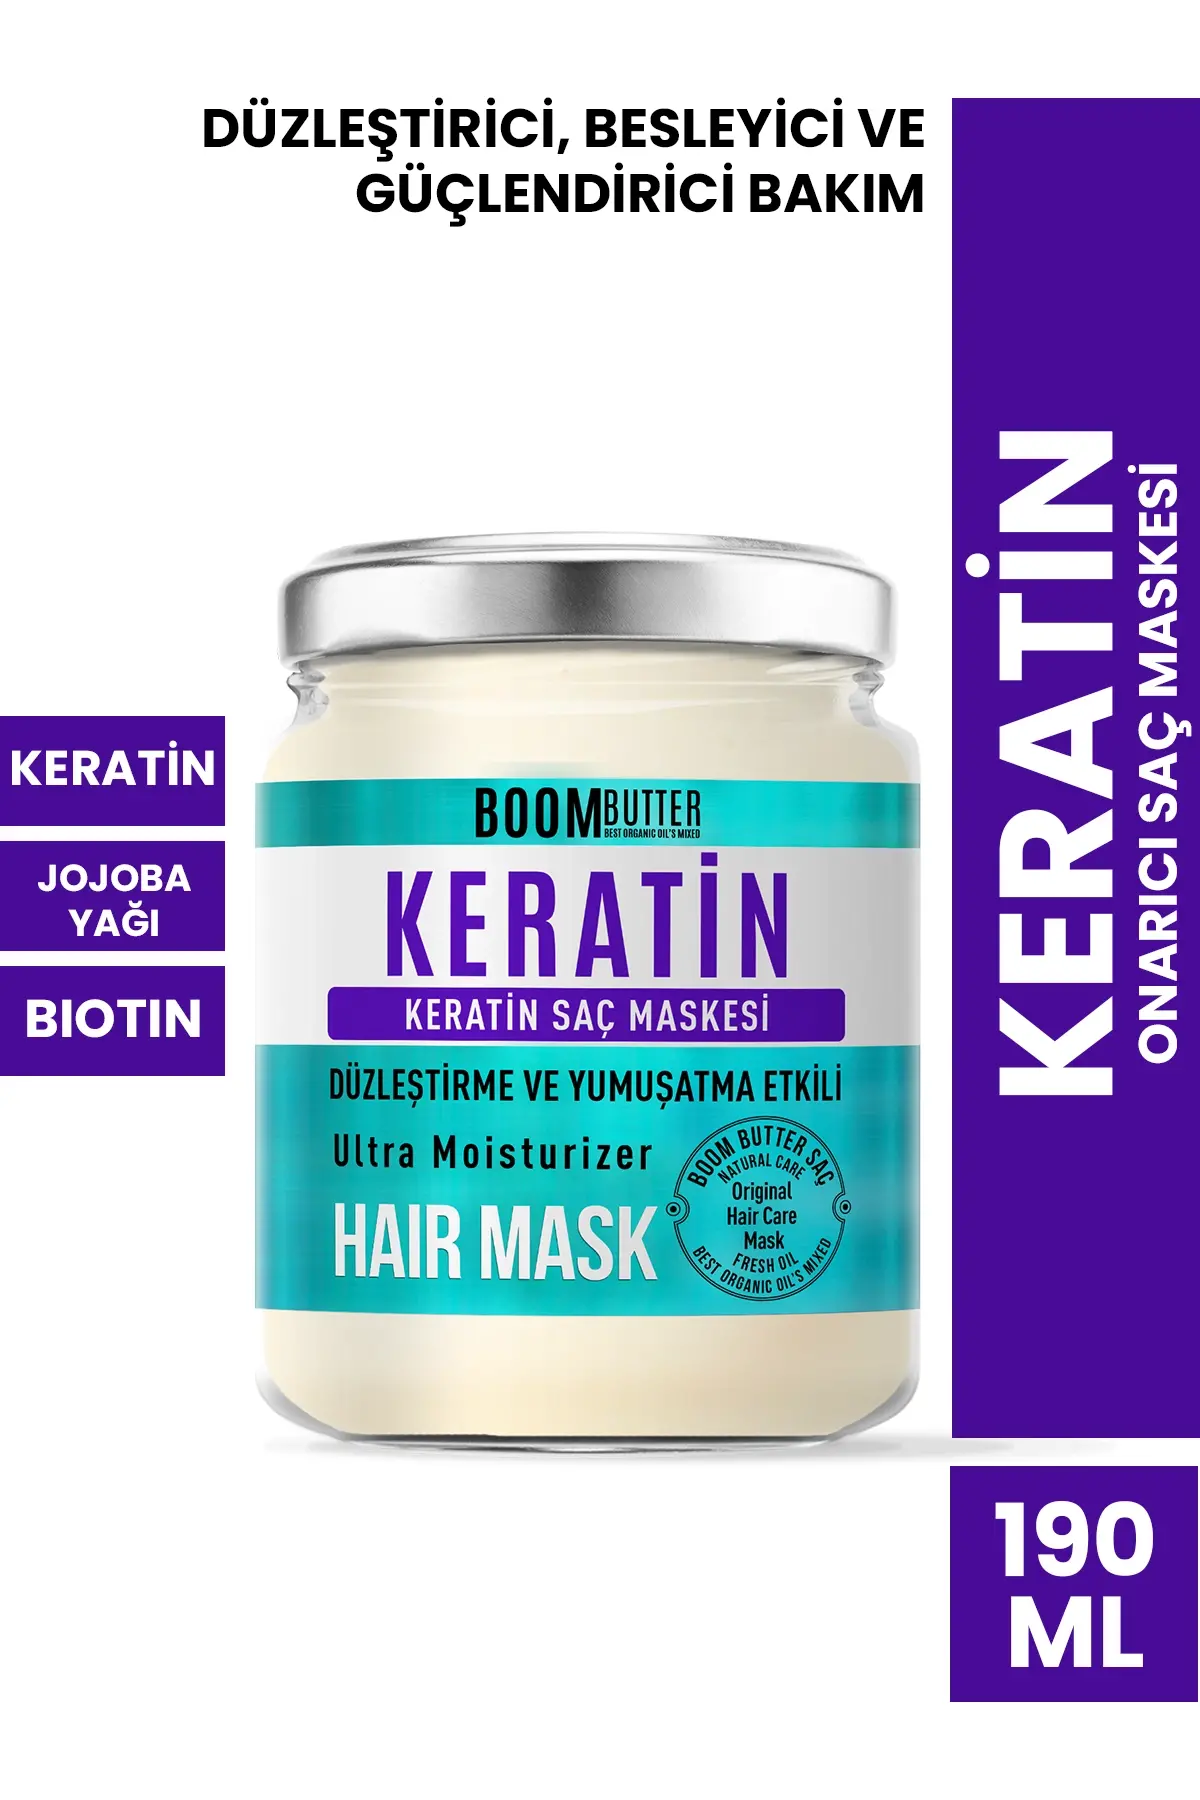 BOOM BUTTER Repairing Keratin Hair Mask 190 ML - 1